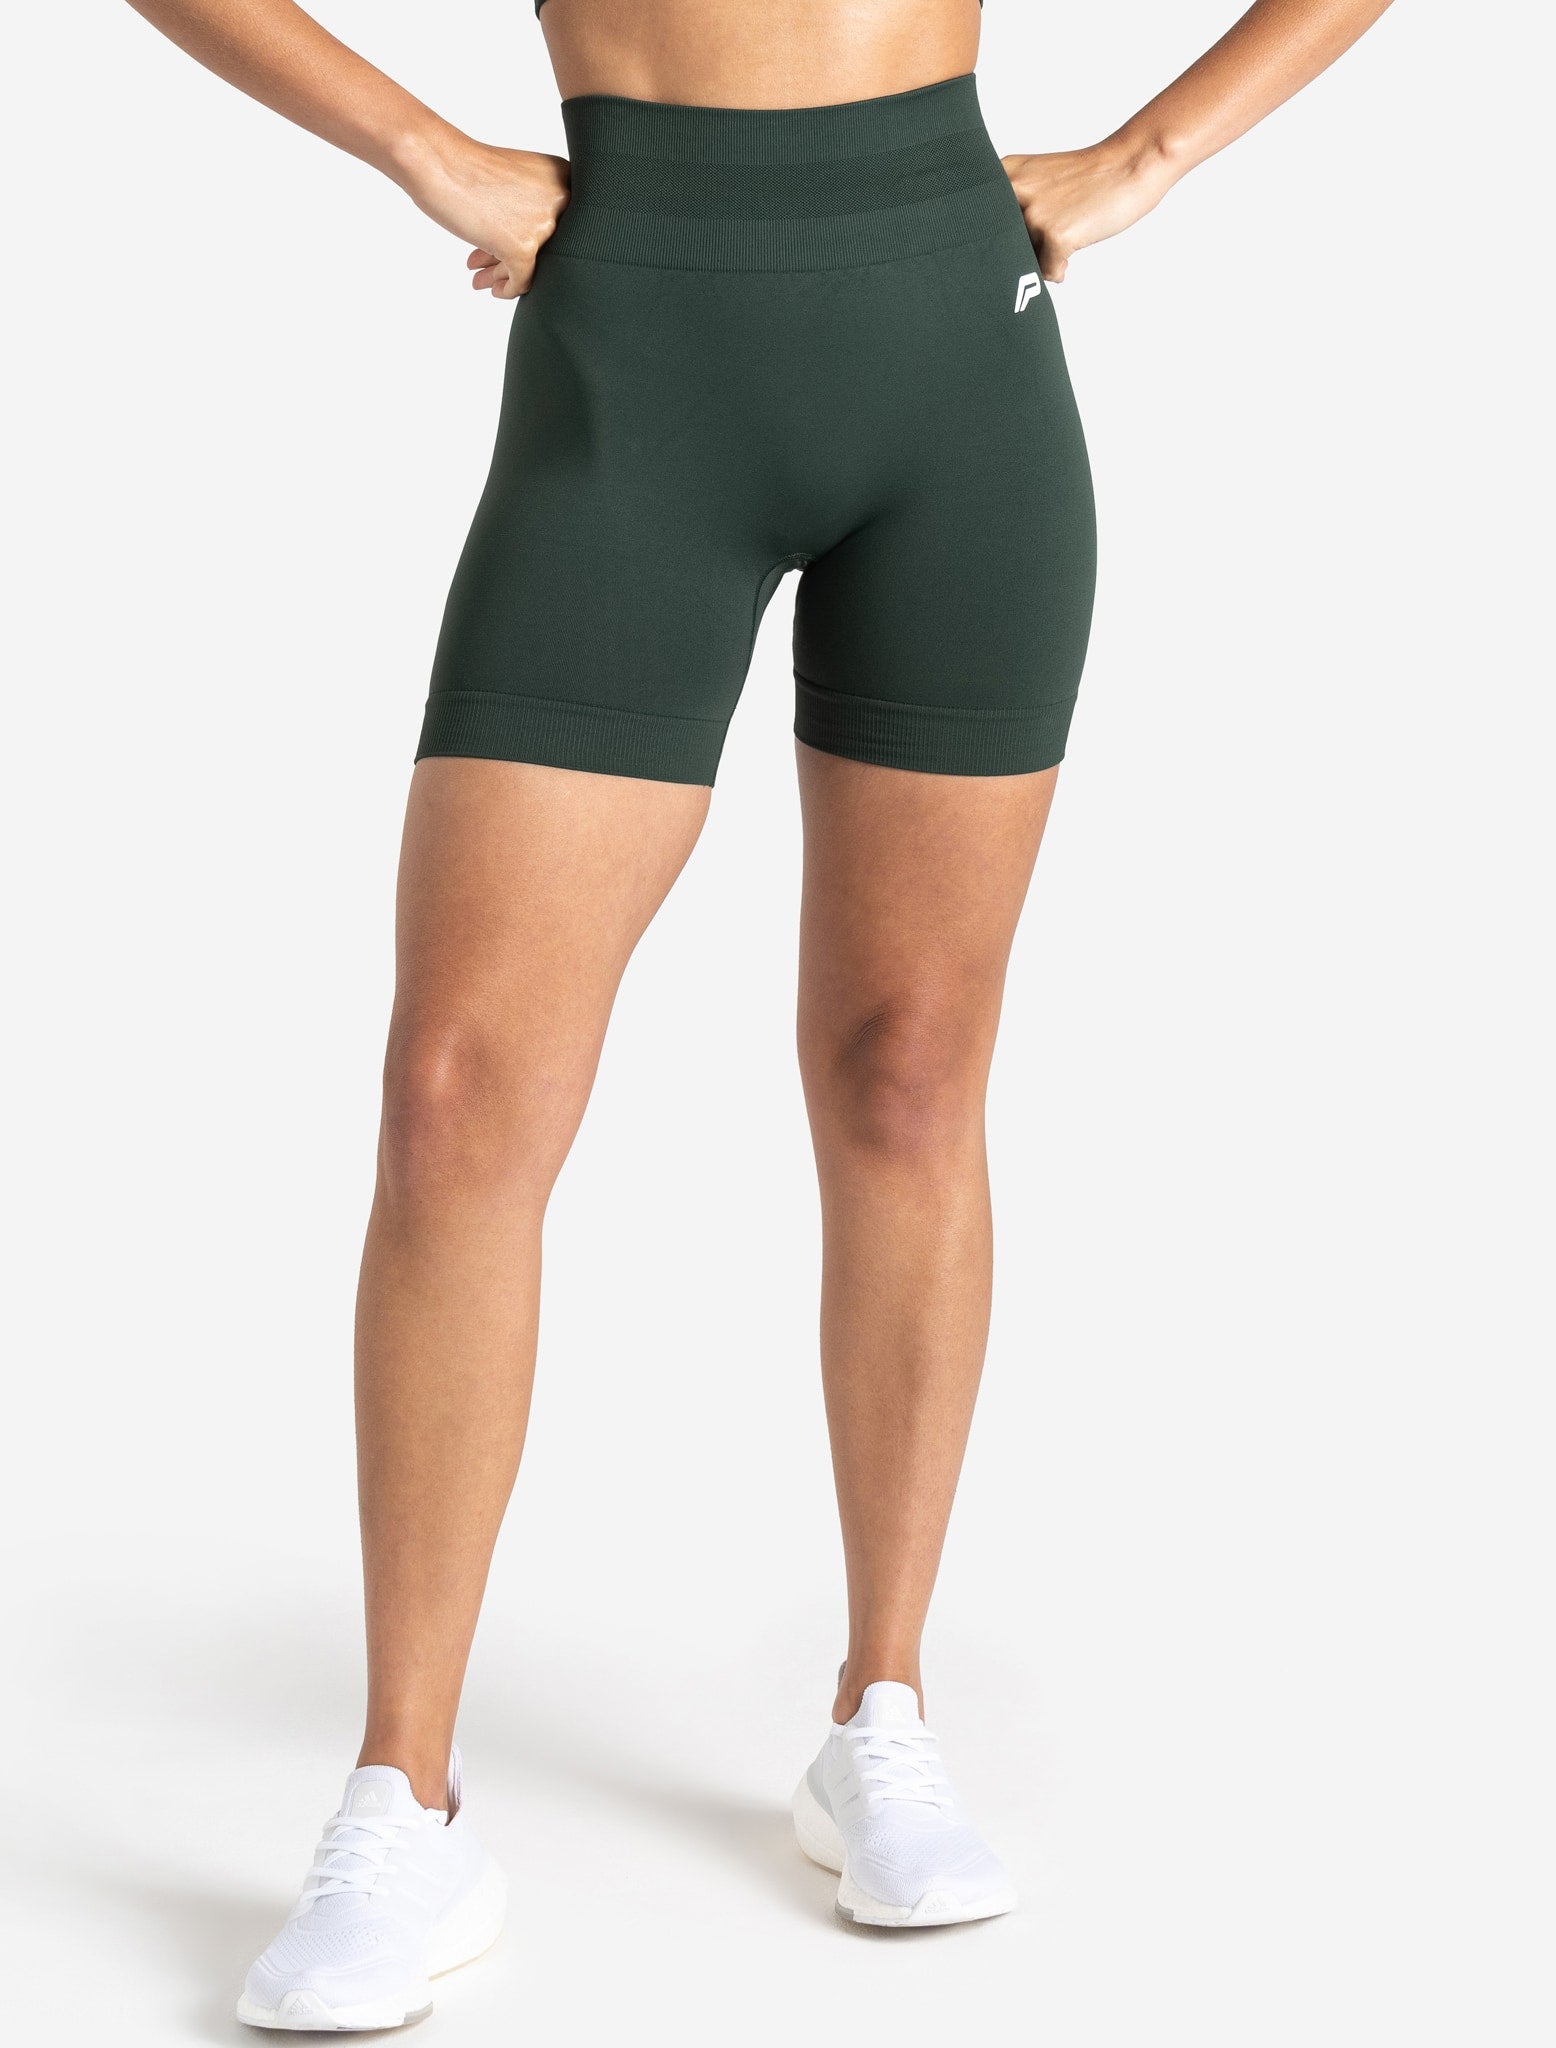 Scrunch Seamless Shorts - Forest Green Pursue Fitness 2